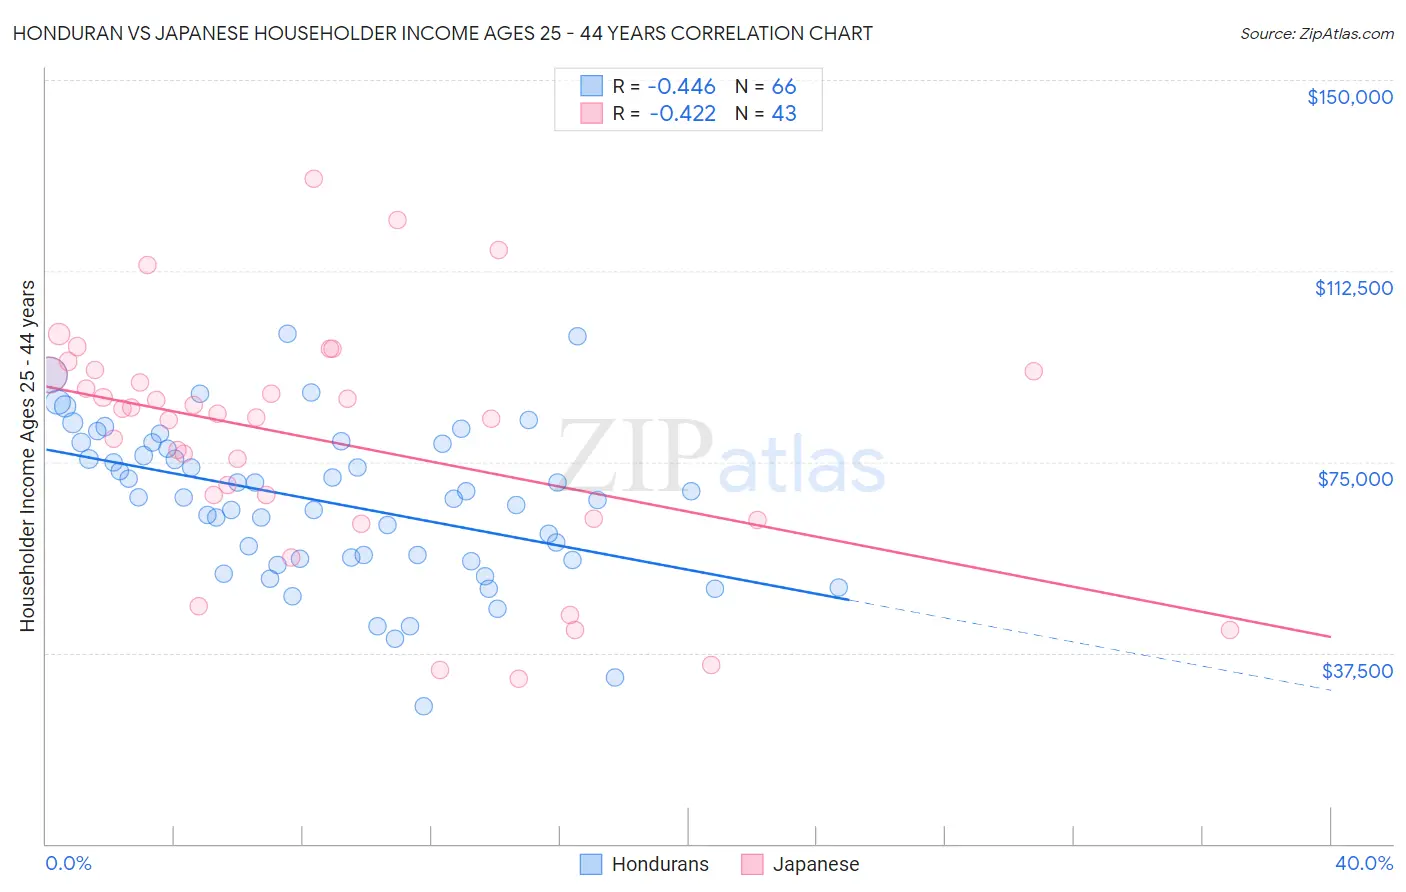 Honduran vs Japanese Householder Income Ages 25 - 44 years